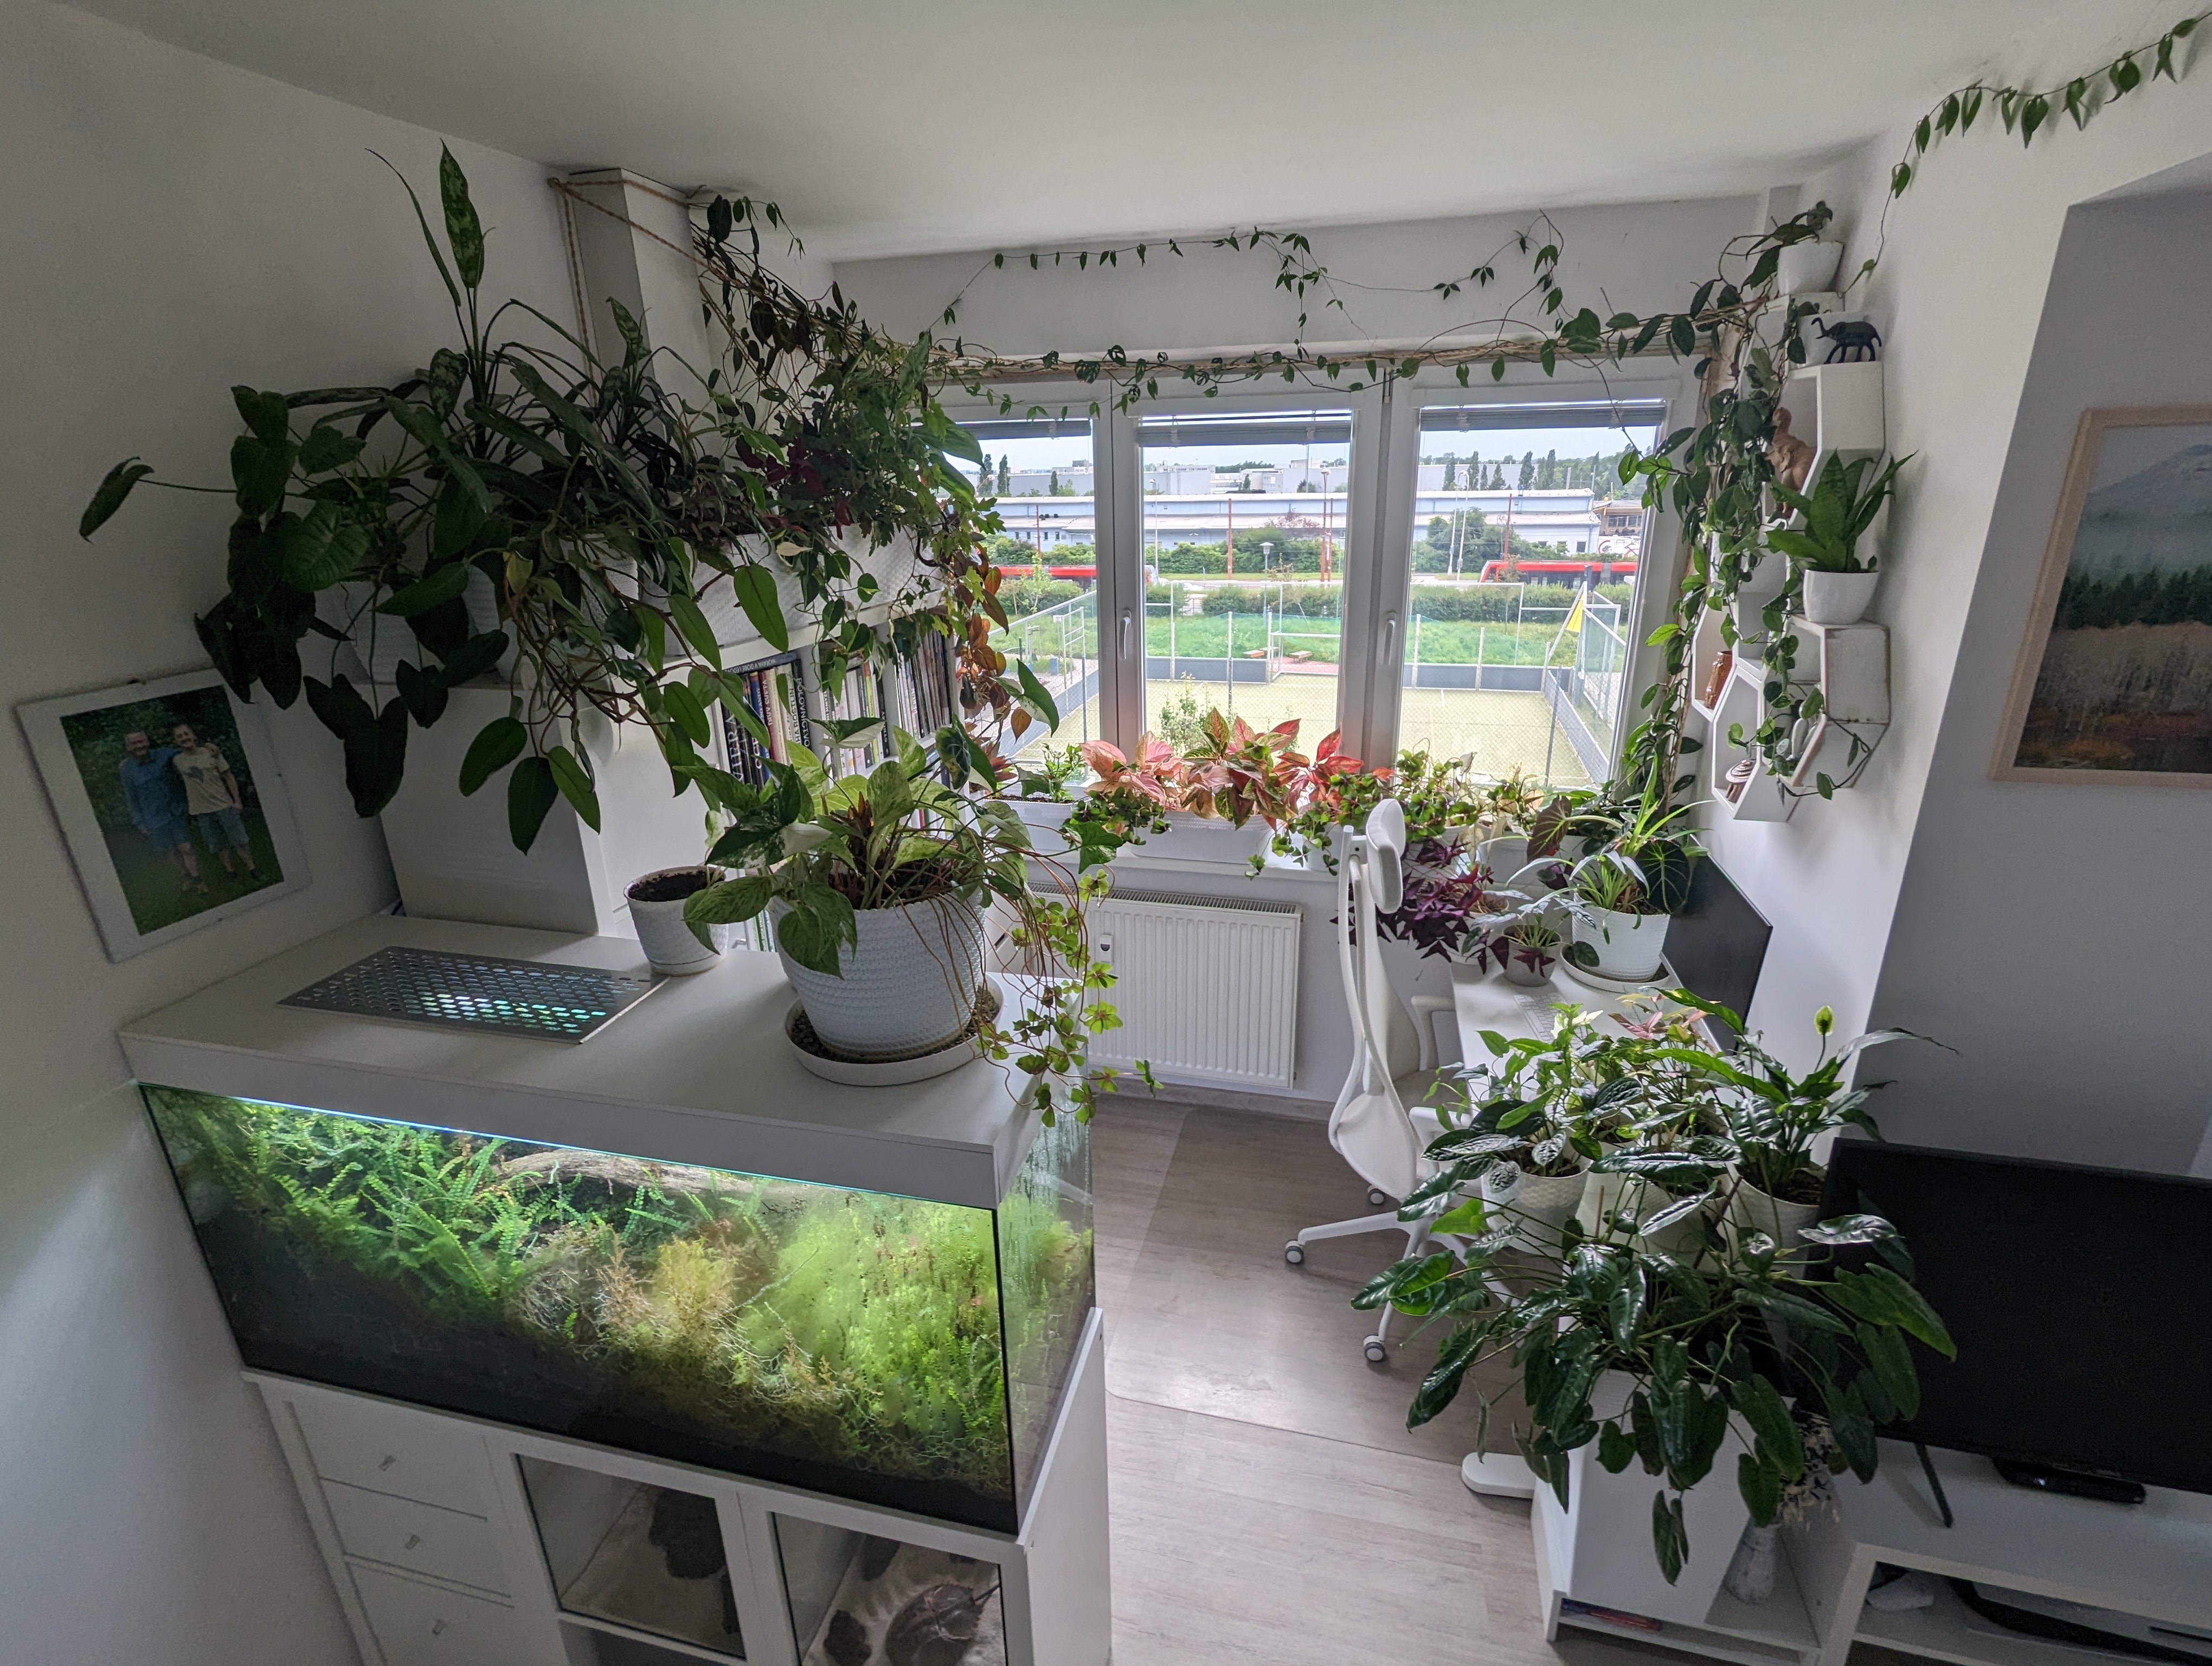 terarium paludarium bioaktvne terarium rastlinne izbove rastliny byt maly garzonka juzne oknojpg